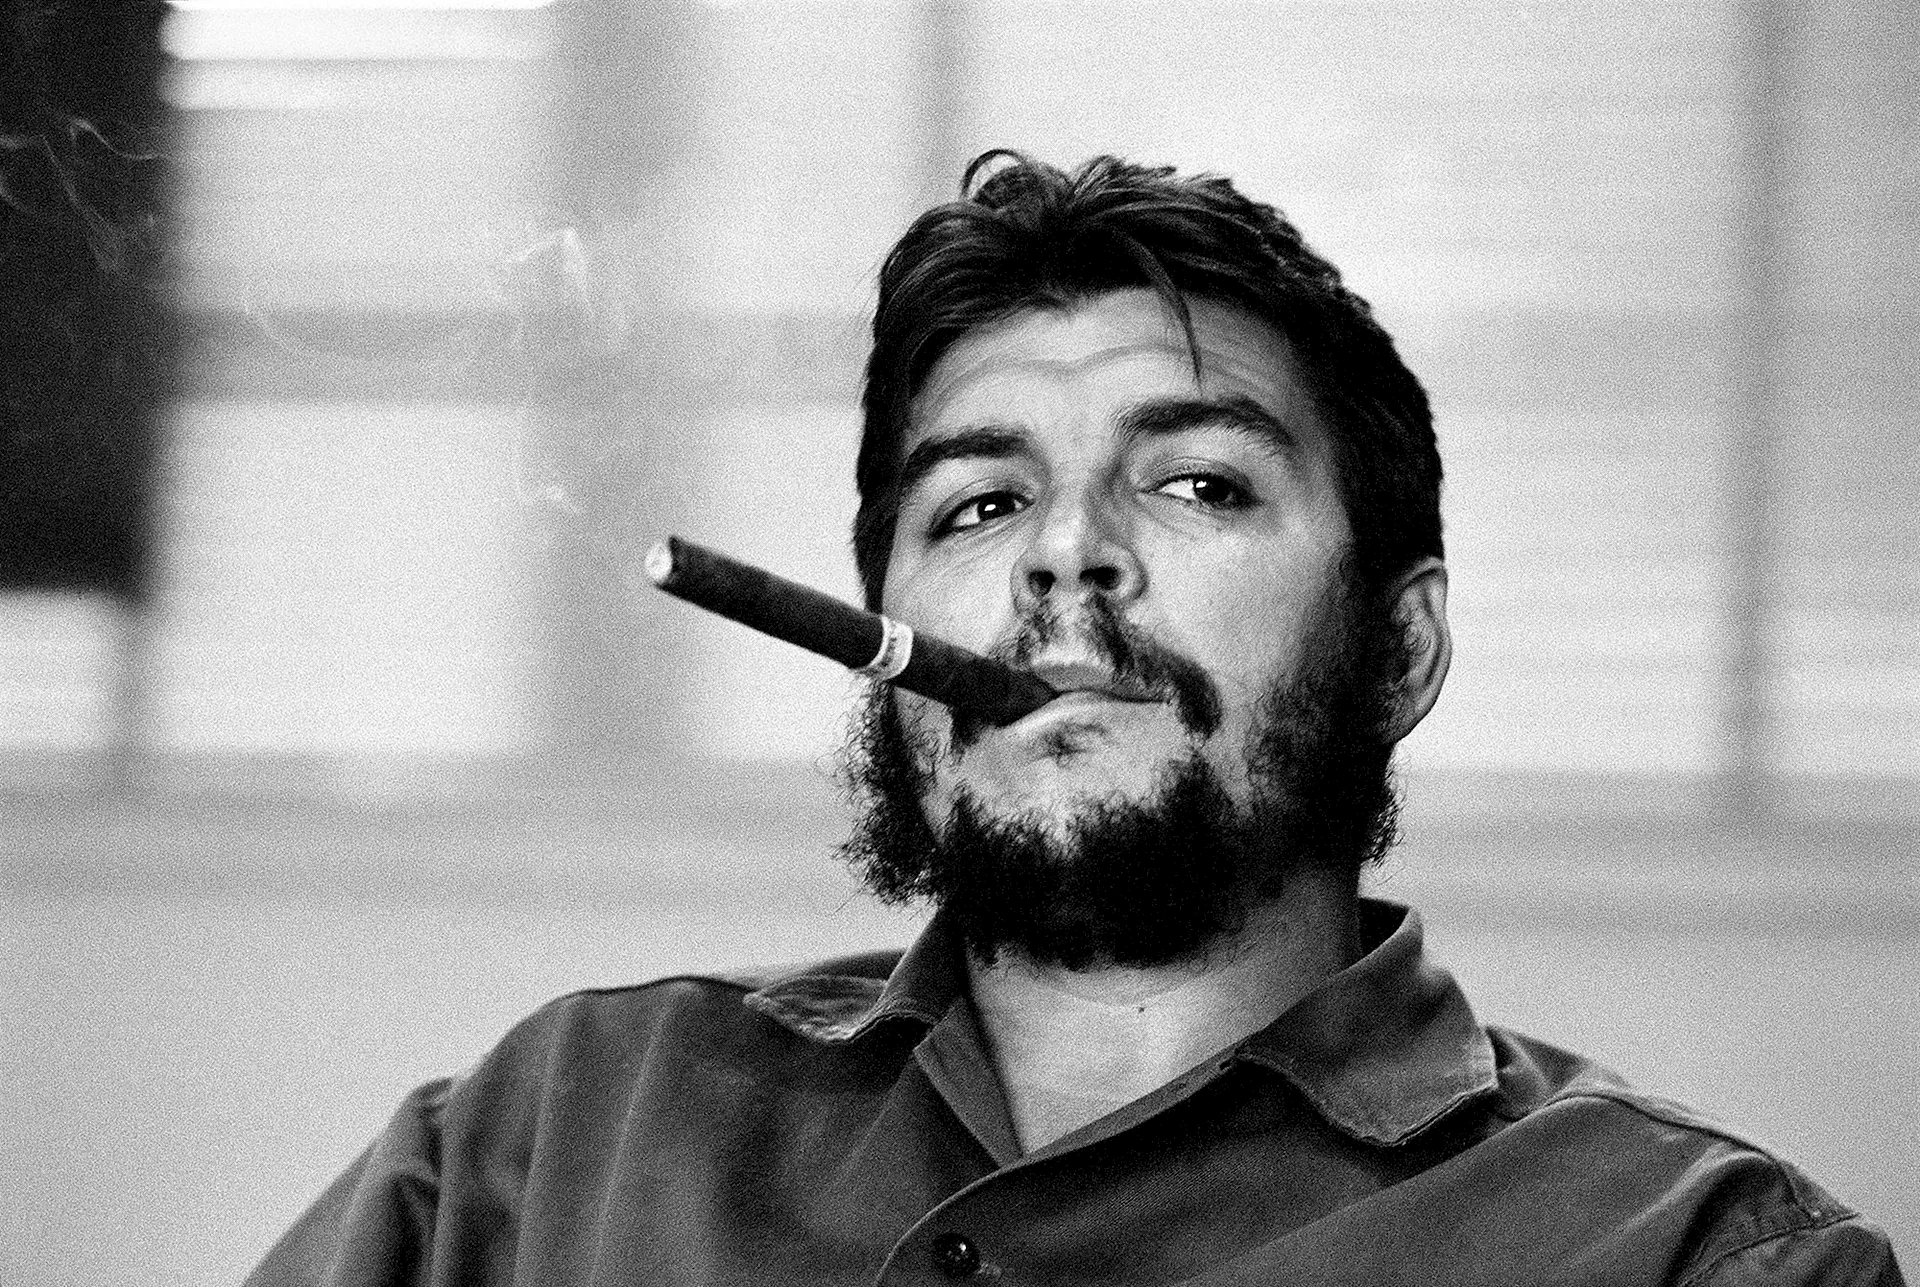 Ernesto Guevara Wallpaper